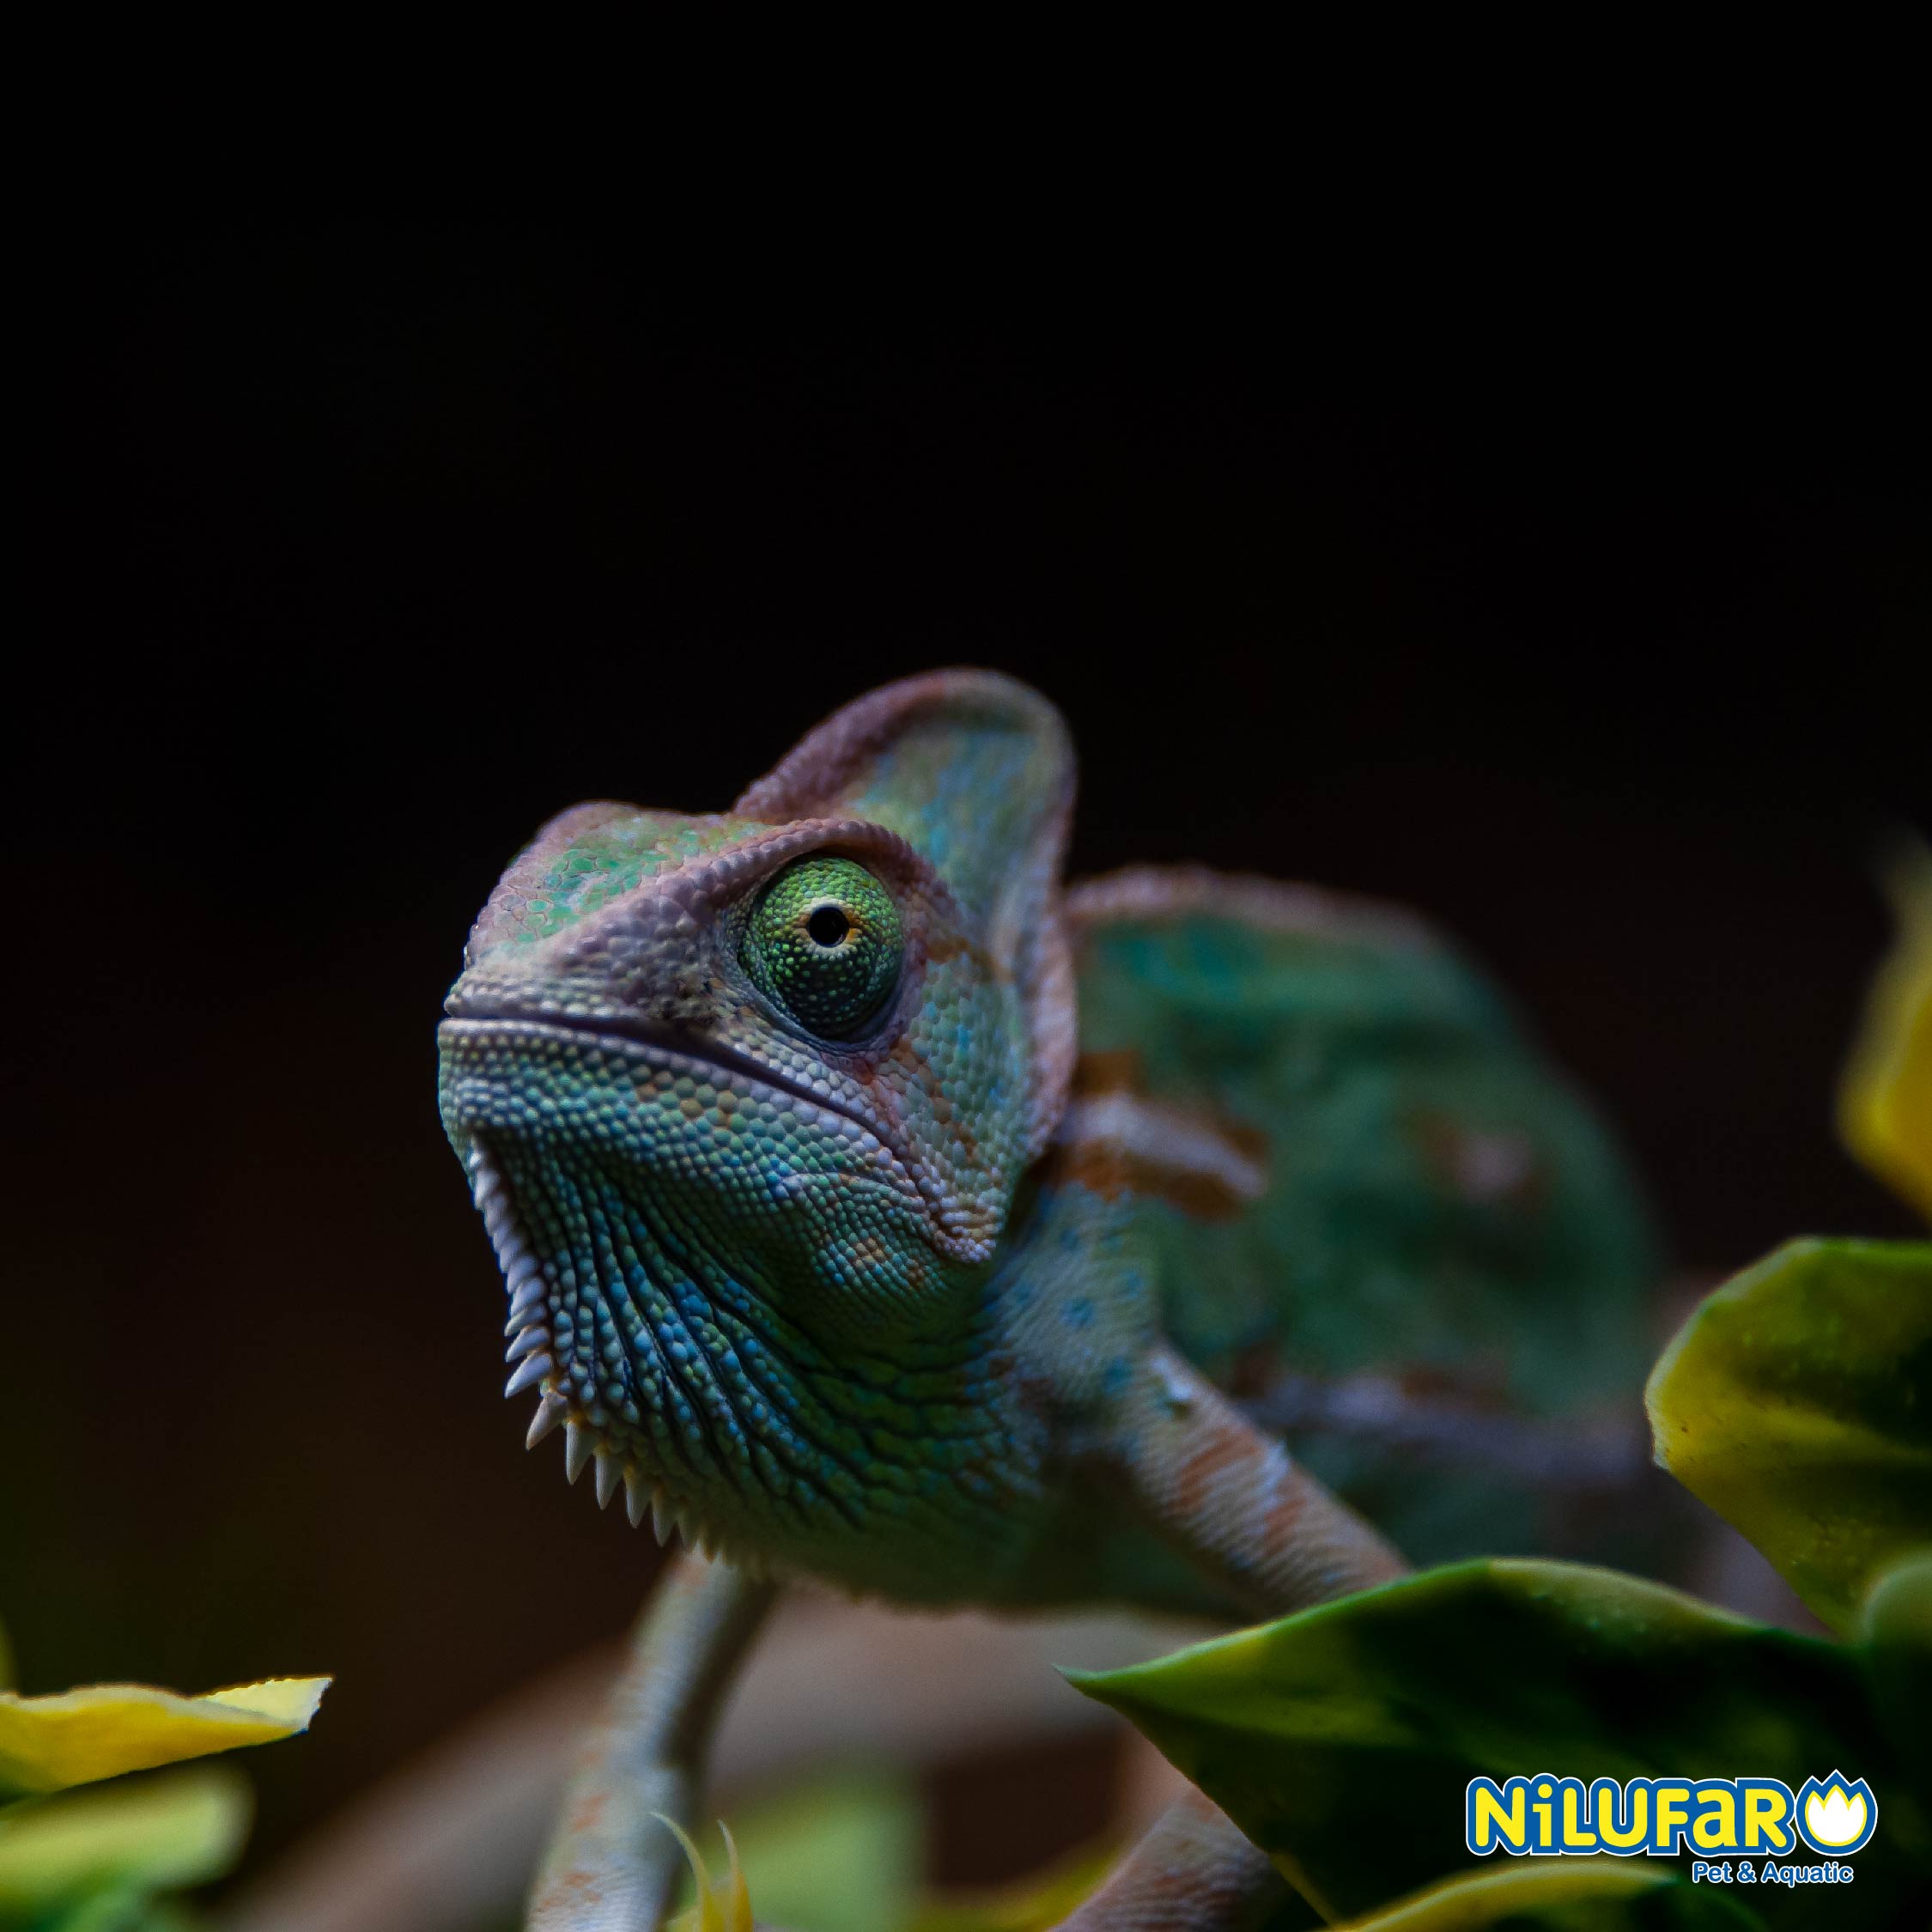 Bearded Dragon – Nilufar